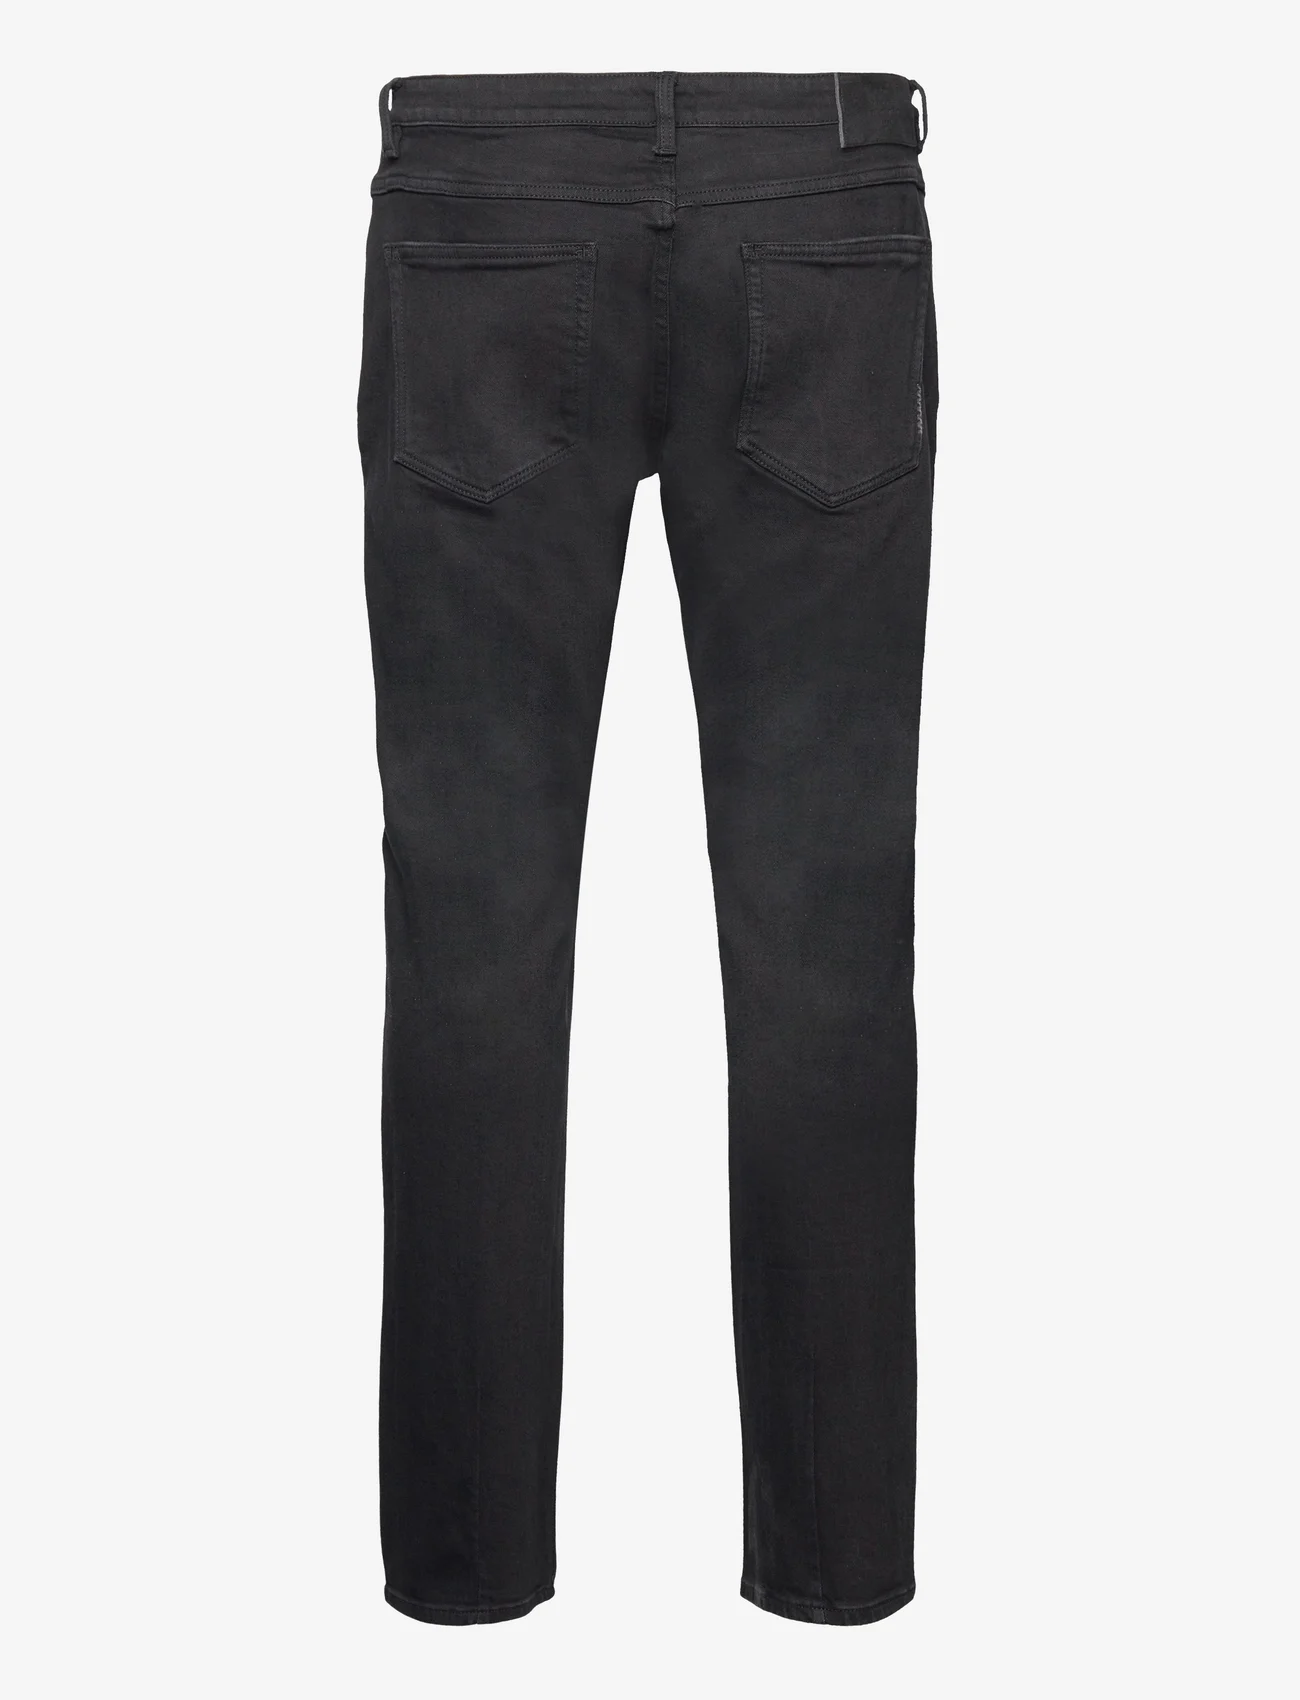 NEUW - LOU STRAIGHT PERFECTO - regular jeans - black - 1